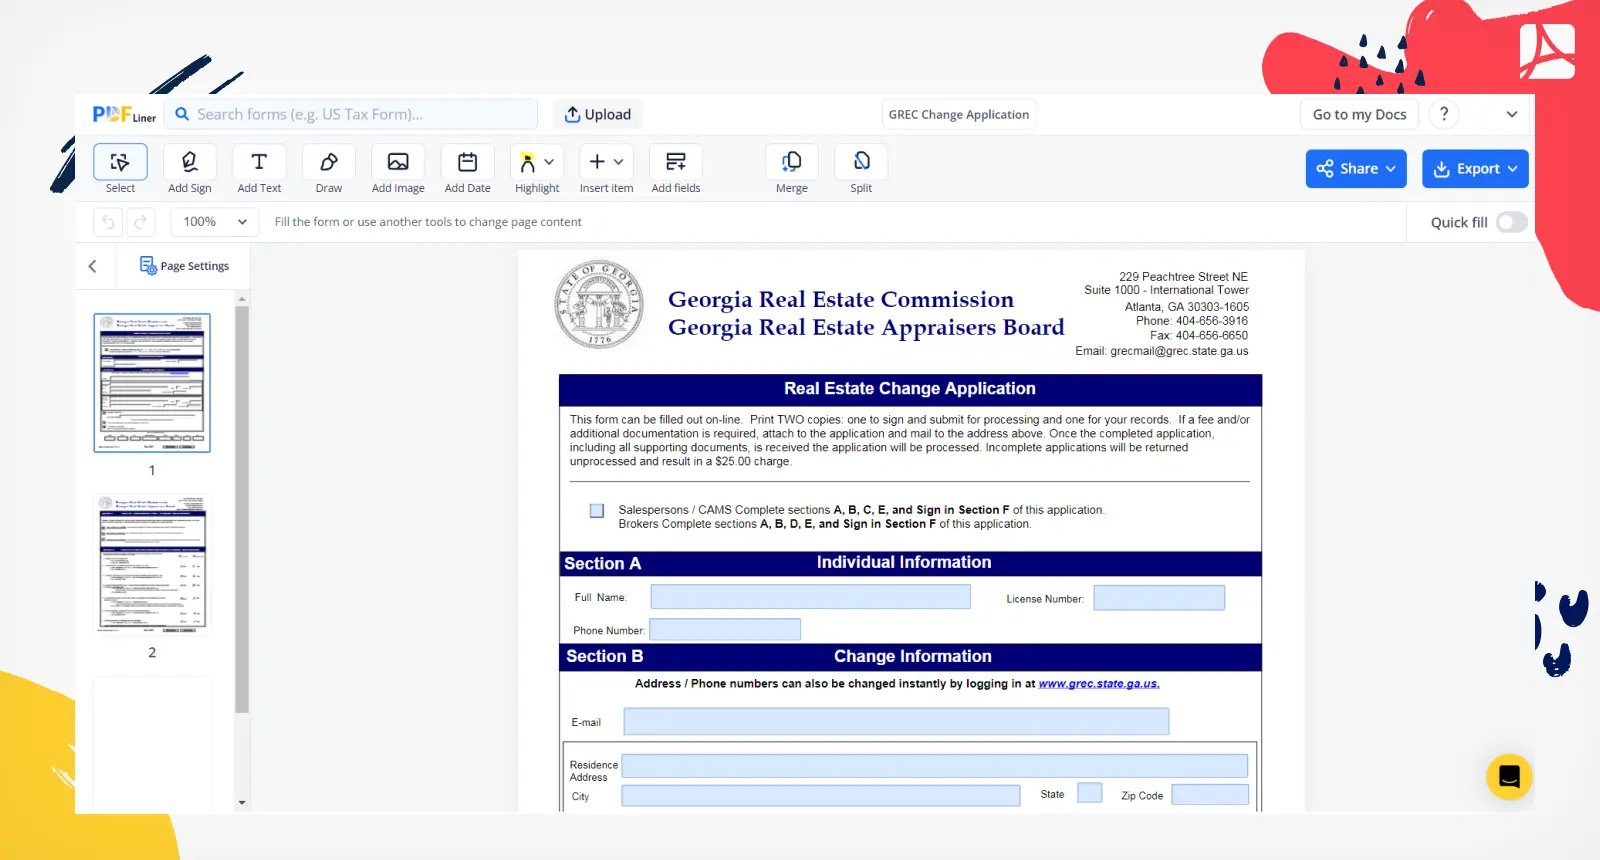 GREC Change Application Form Screenshot